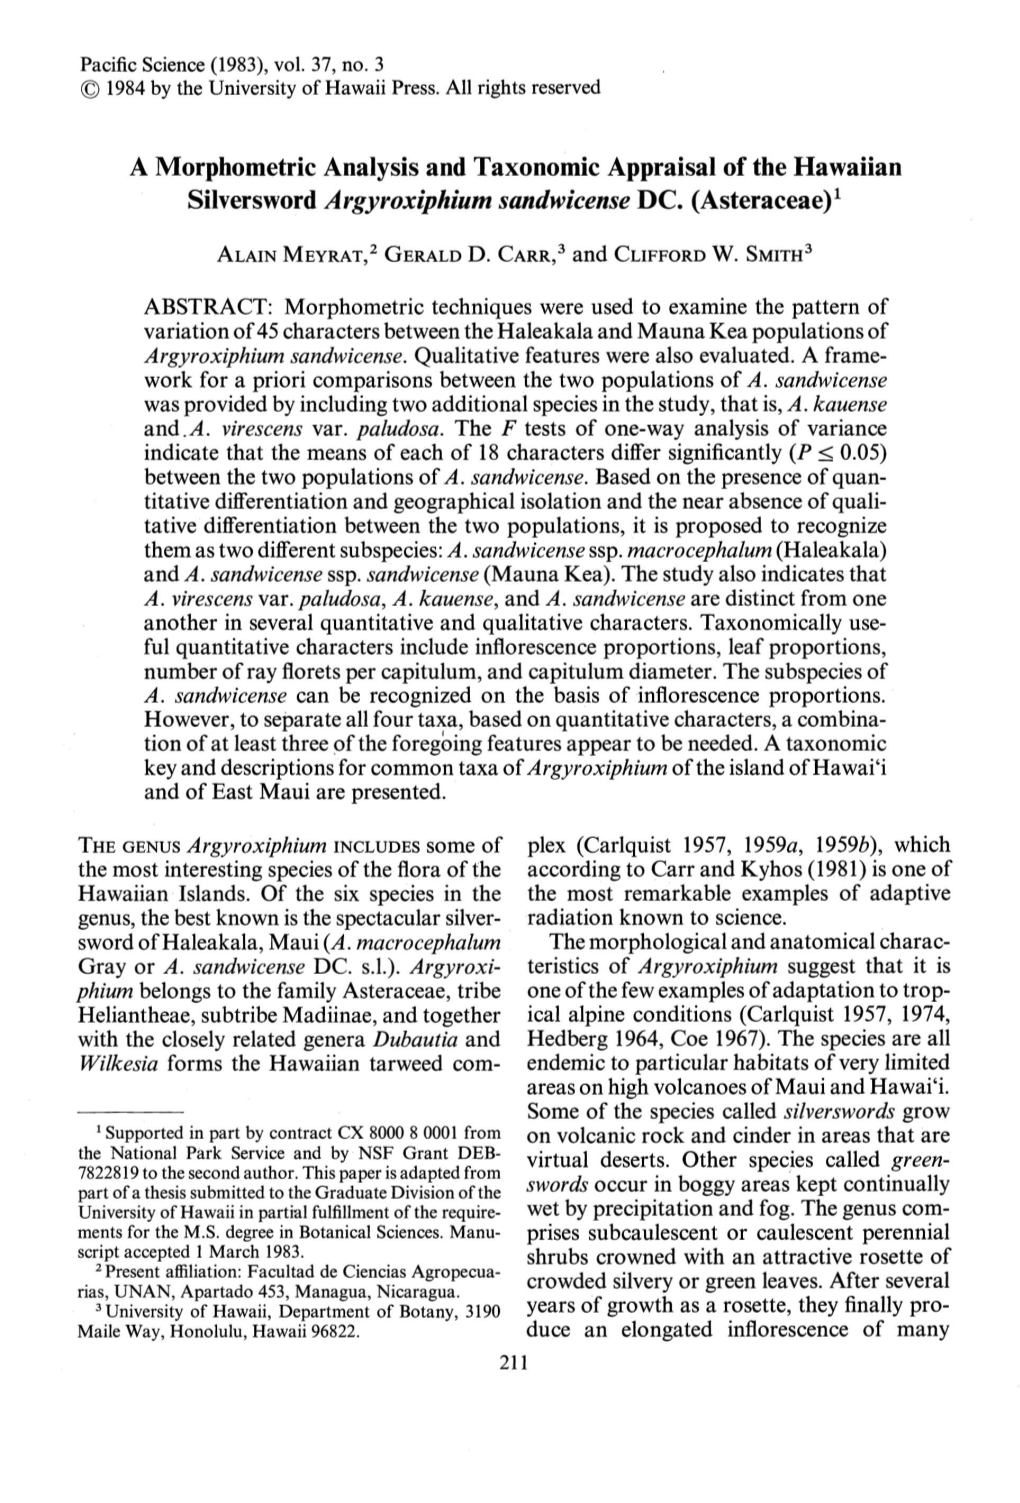 A Morphometric Analysis and Taxonomic Appraisal of the Hawaiian Silversword Argyroxiphium Sandwicense DC